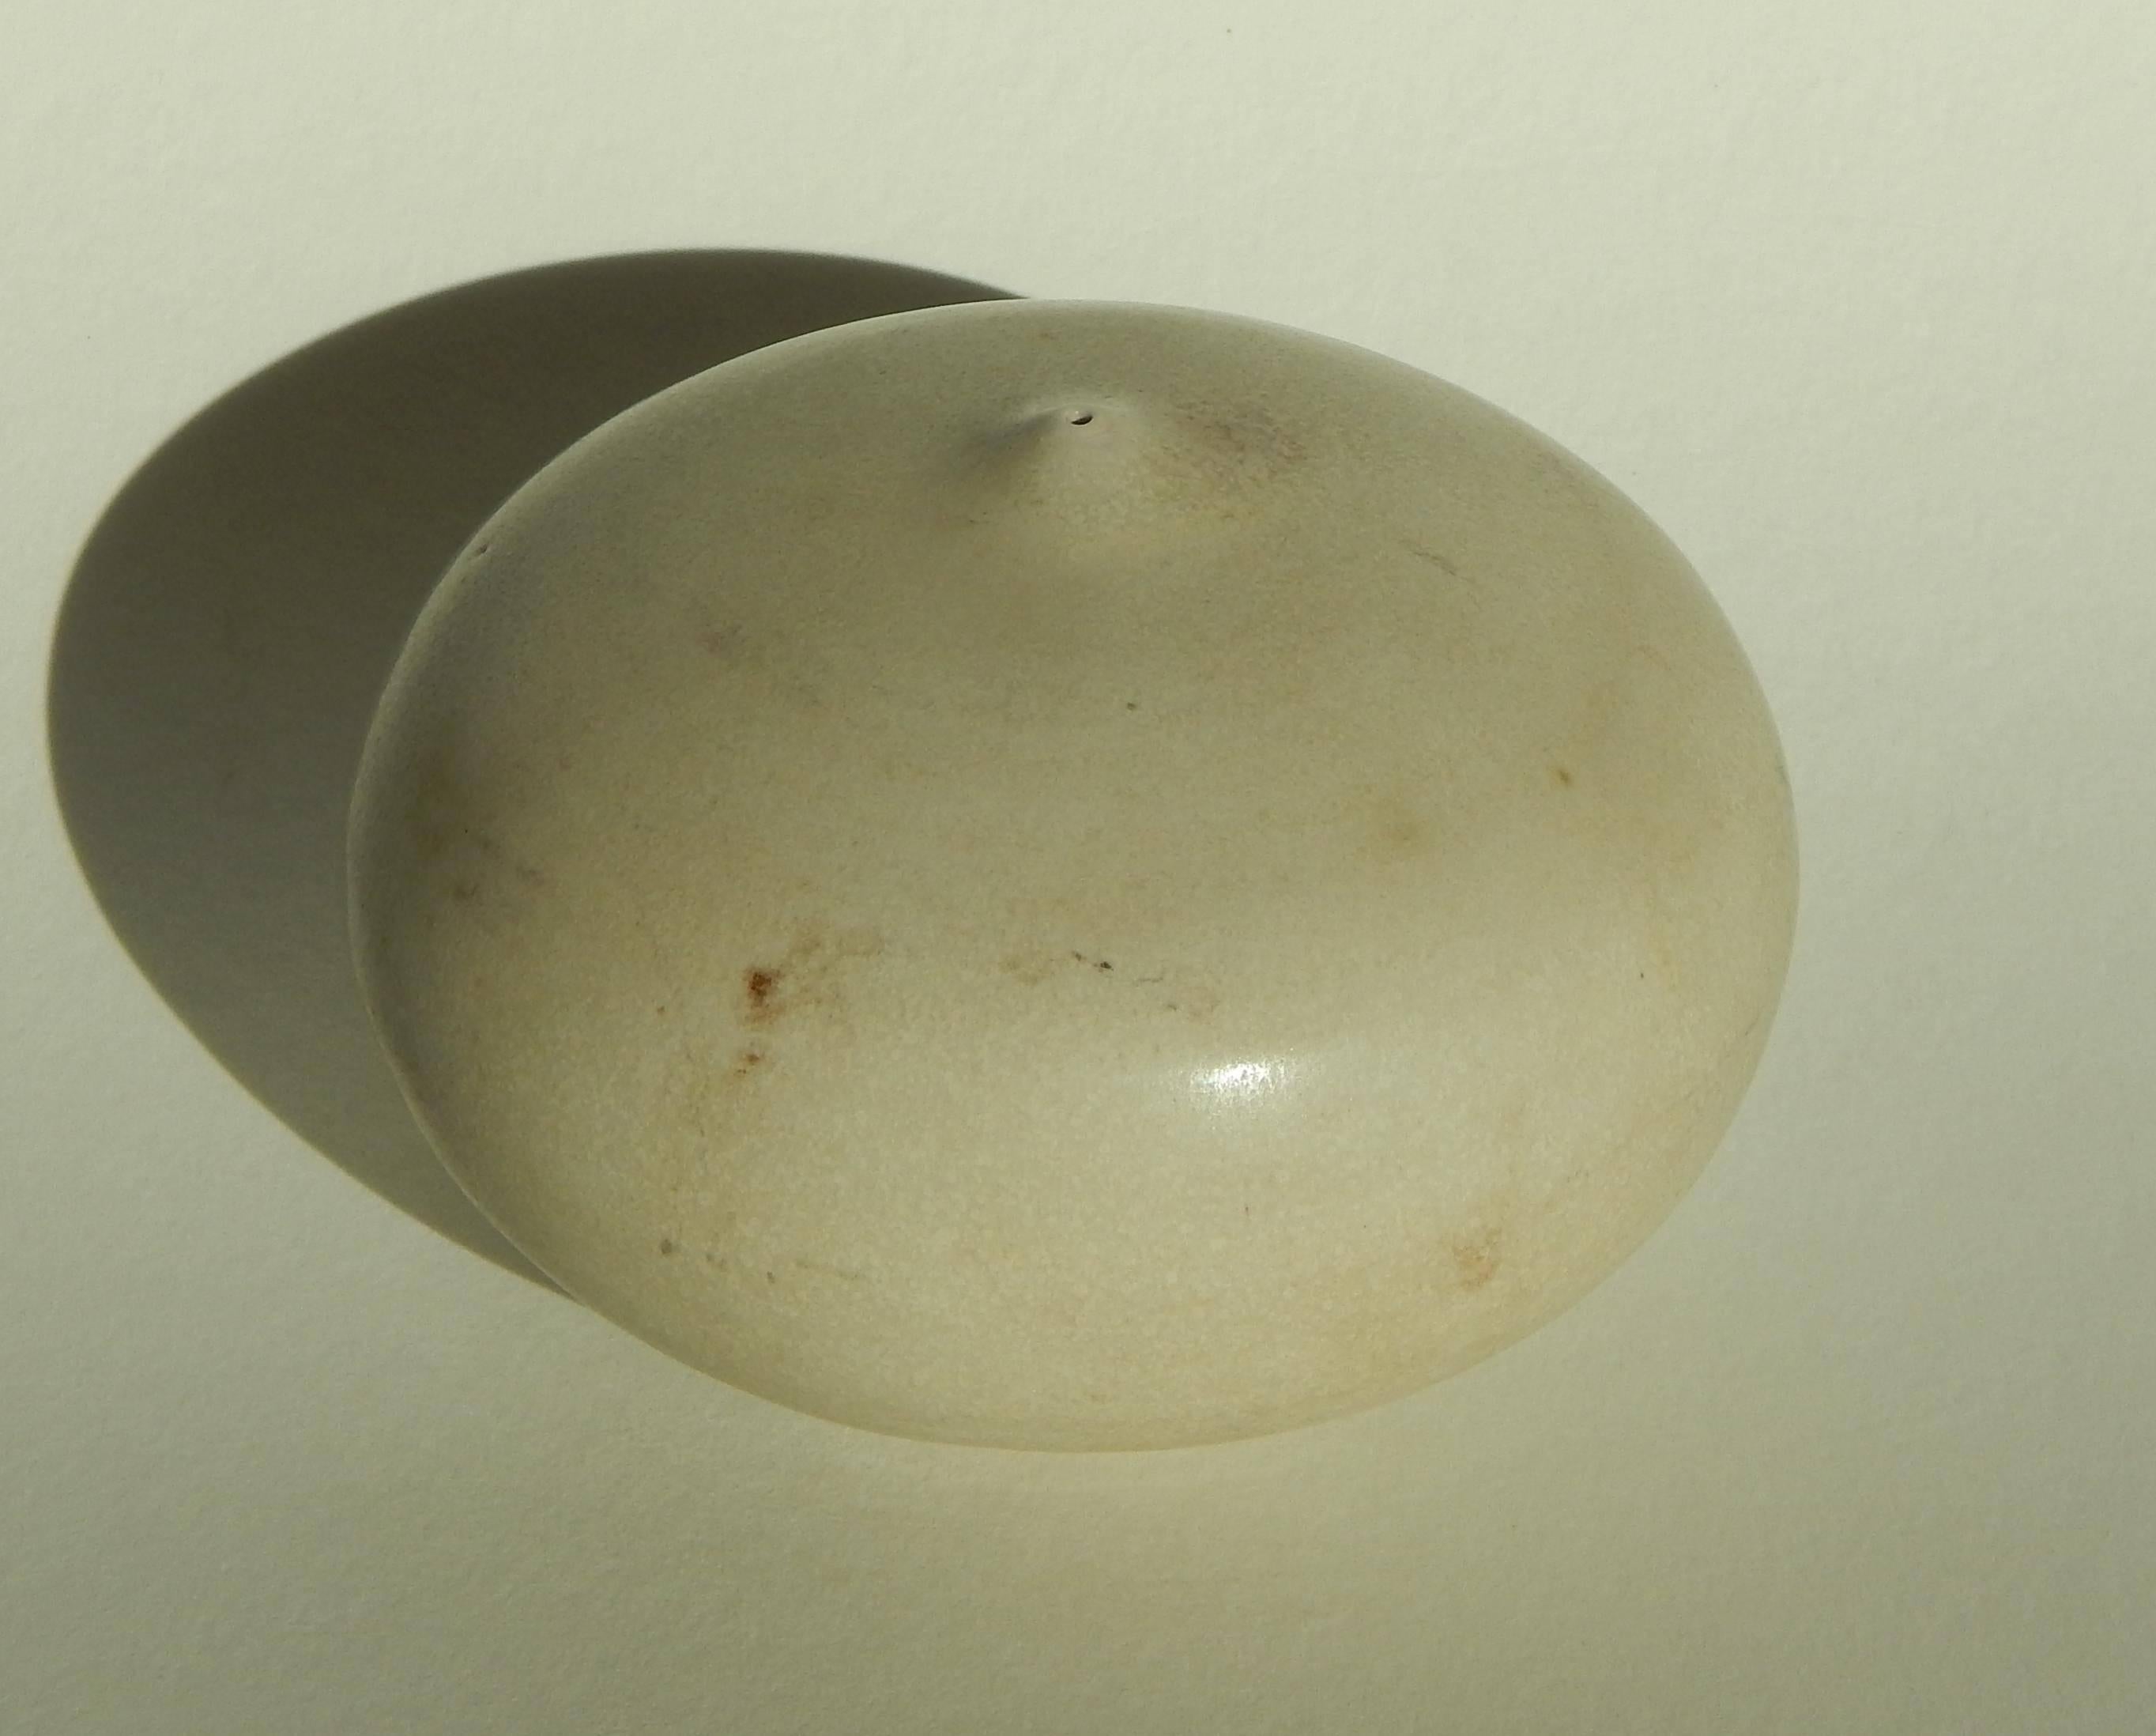 Toshiko Takaezu solid cream moon pot with rattle.
Measures: 3